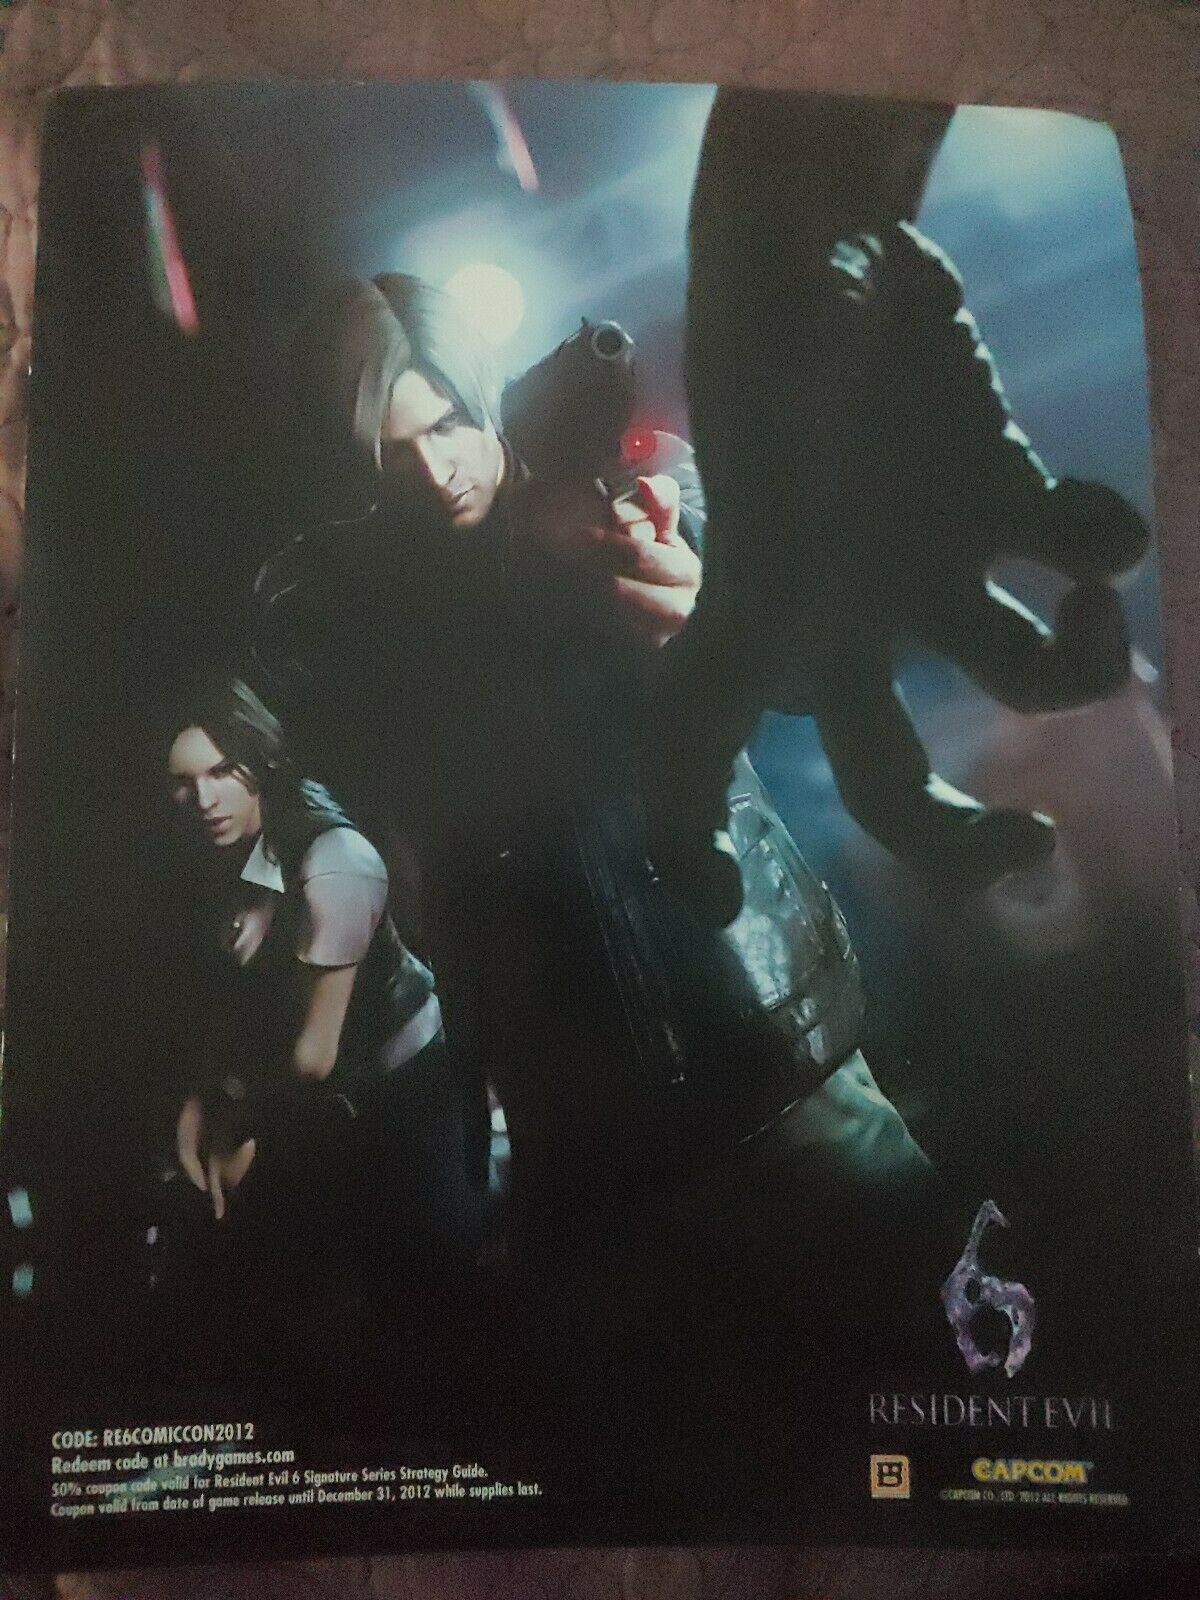 2012 Resident Evil Capcom Promo Poster